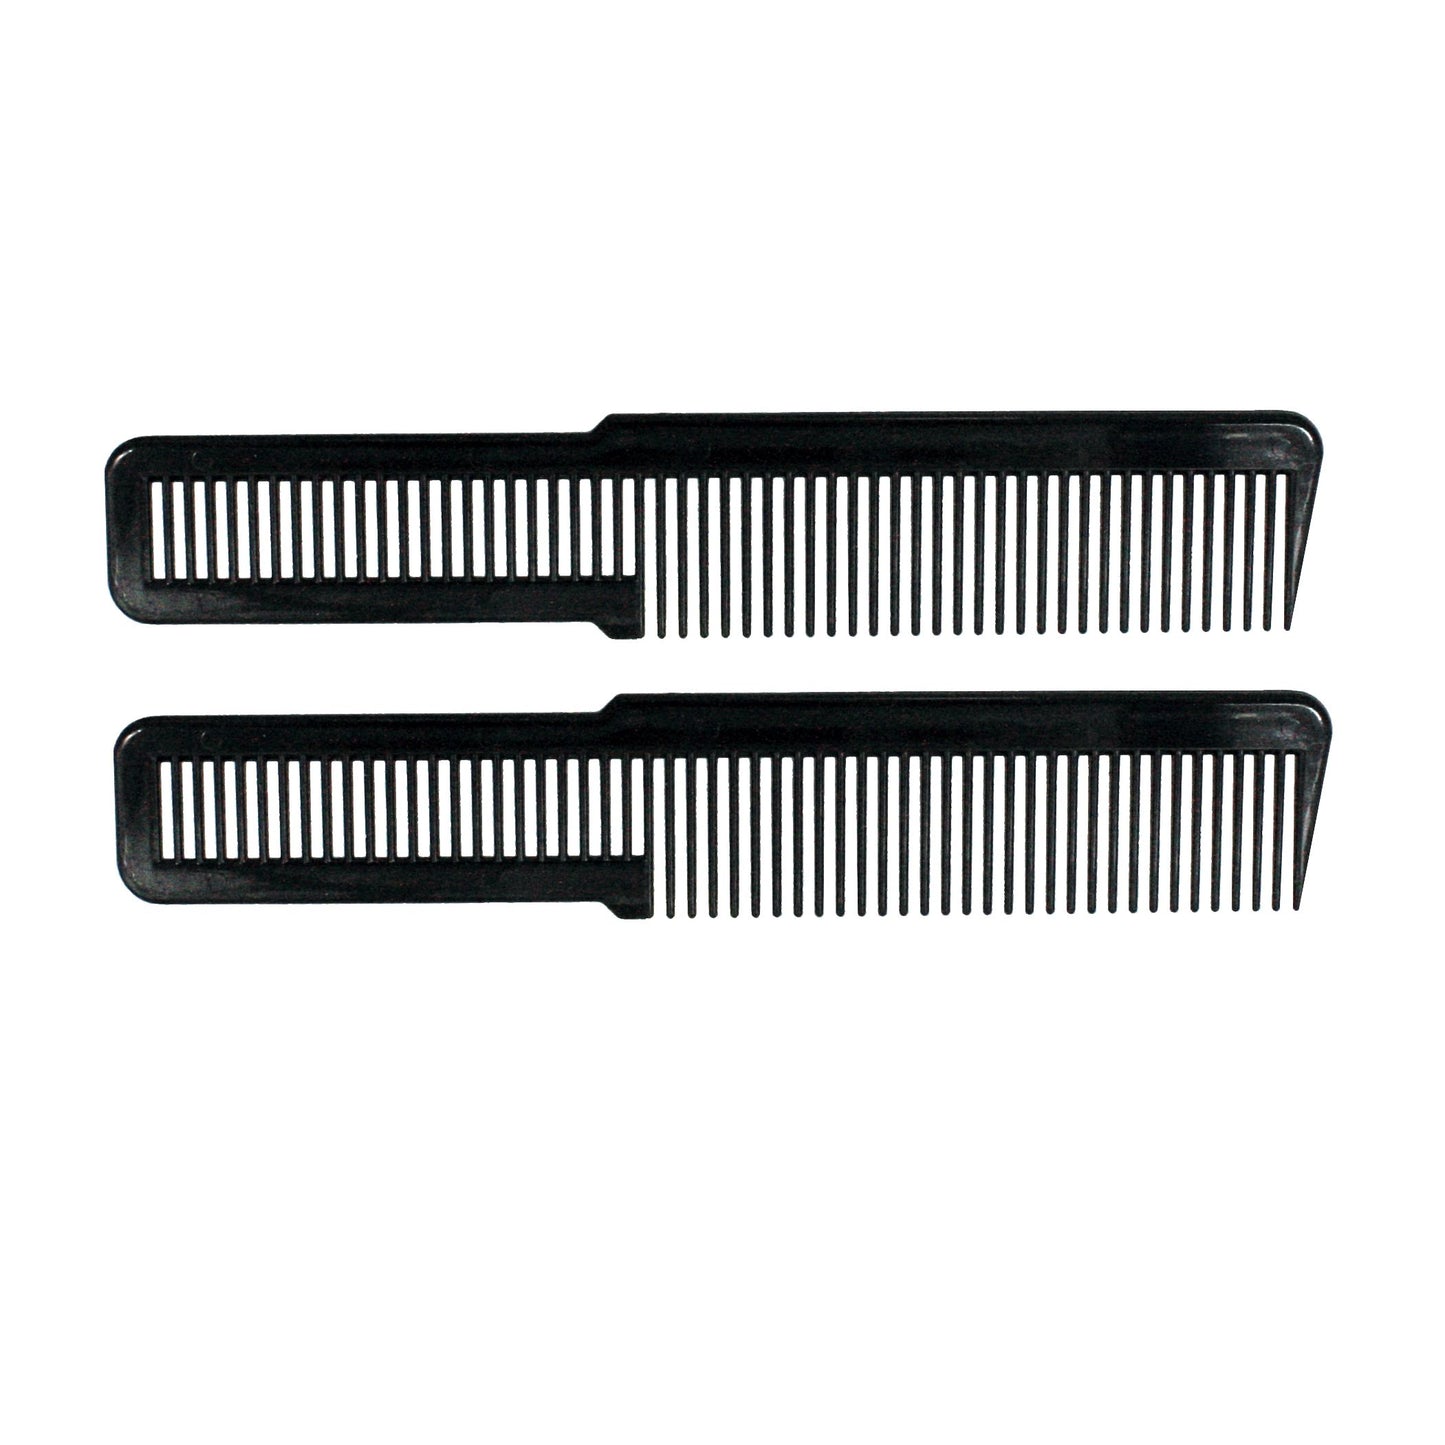 8in Plastic Klipper Comb - Black (2 Pack)